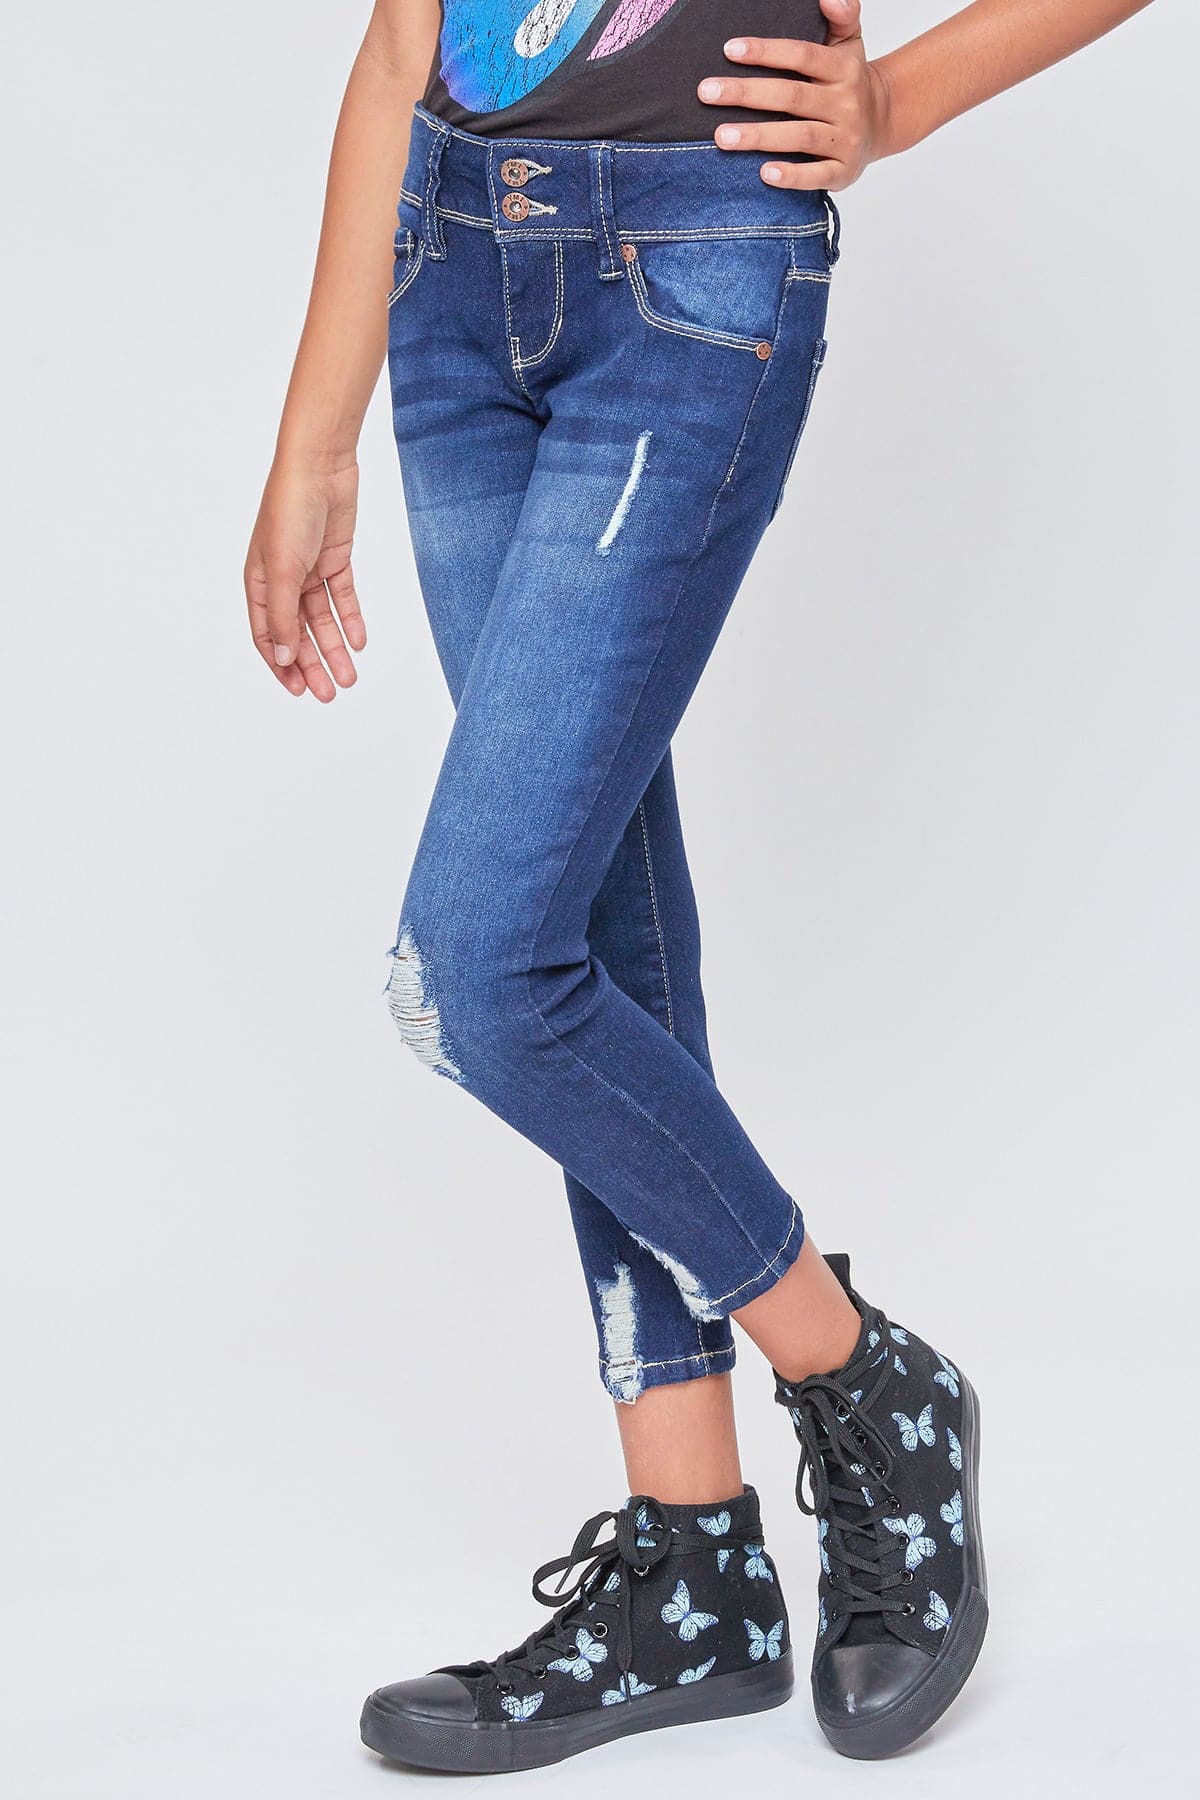 Girls Essential 2-Button Anklet Jeans W/Distressed Hem